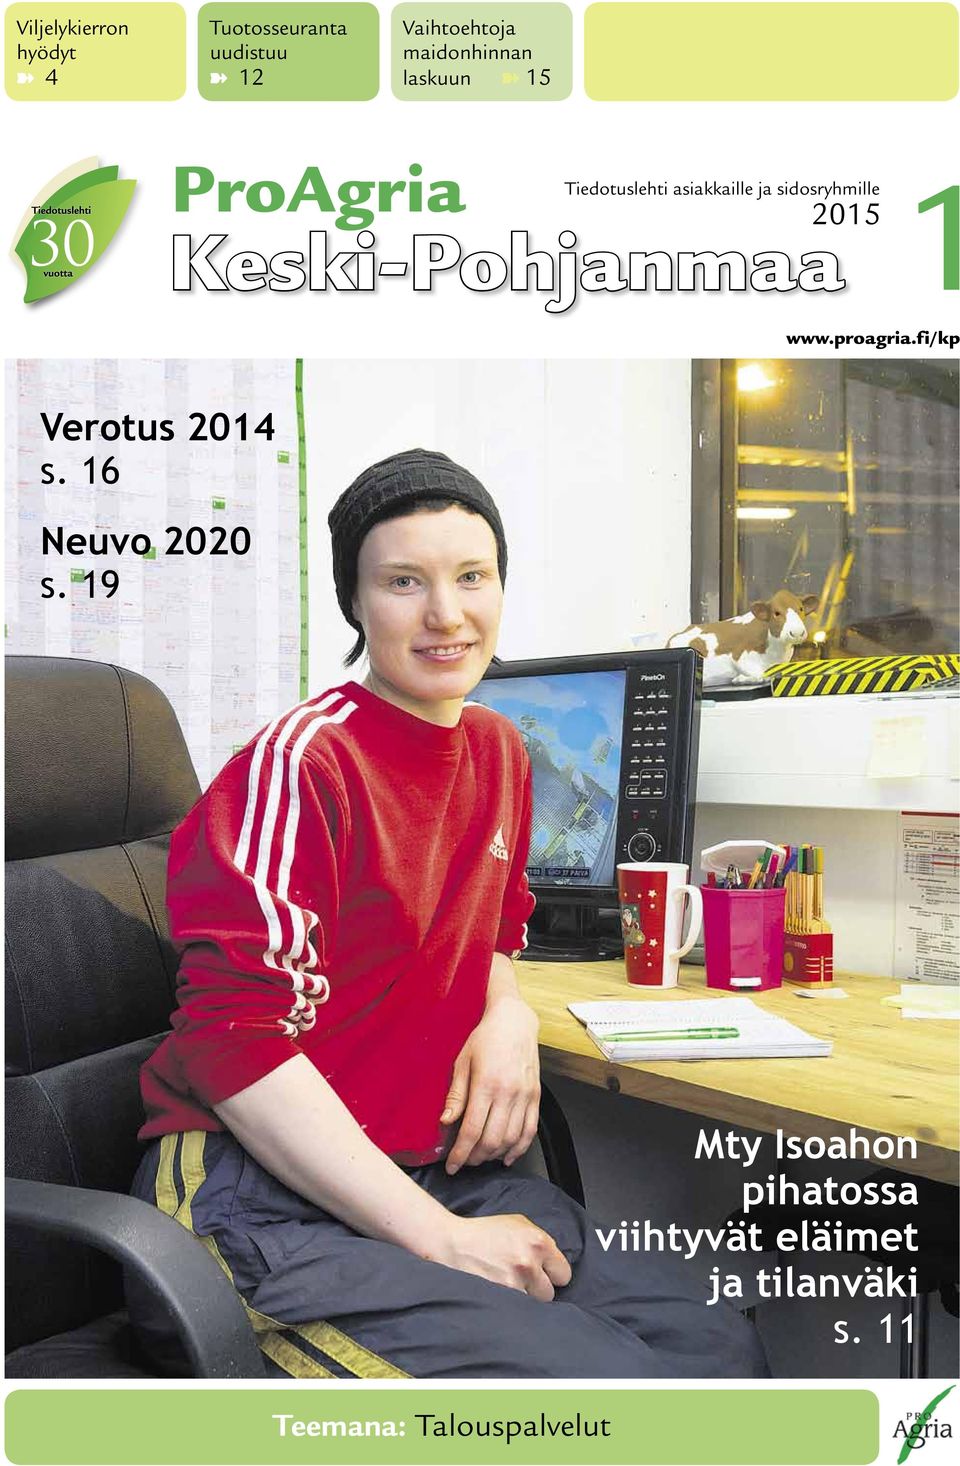 Keski-Pohjanmaa www.proagria.fi/kp Verotus 2014 s. 16 Neuvo 2020 s.